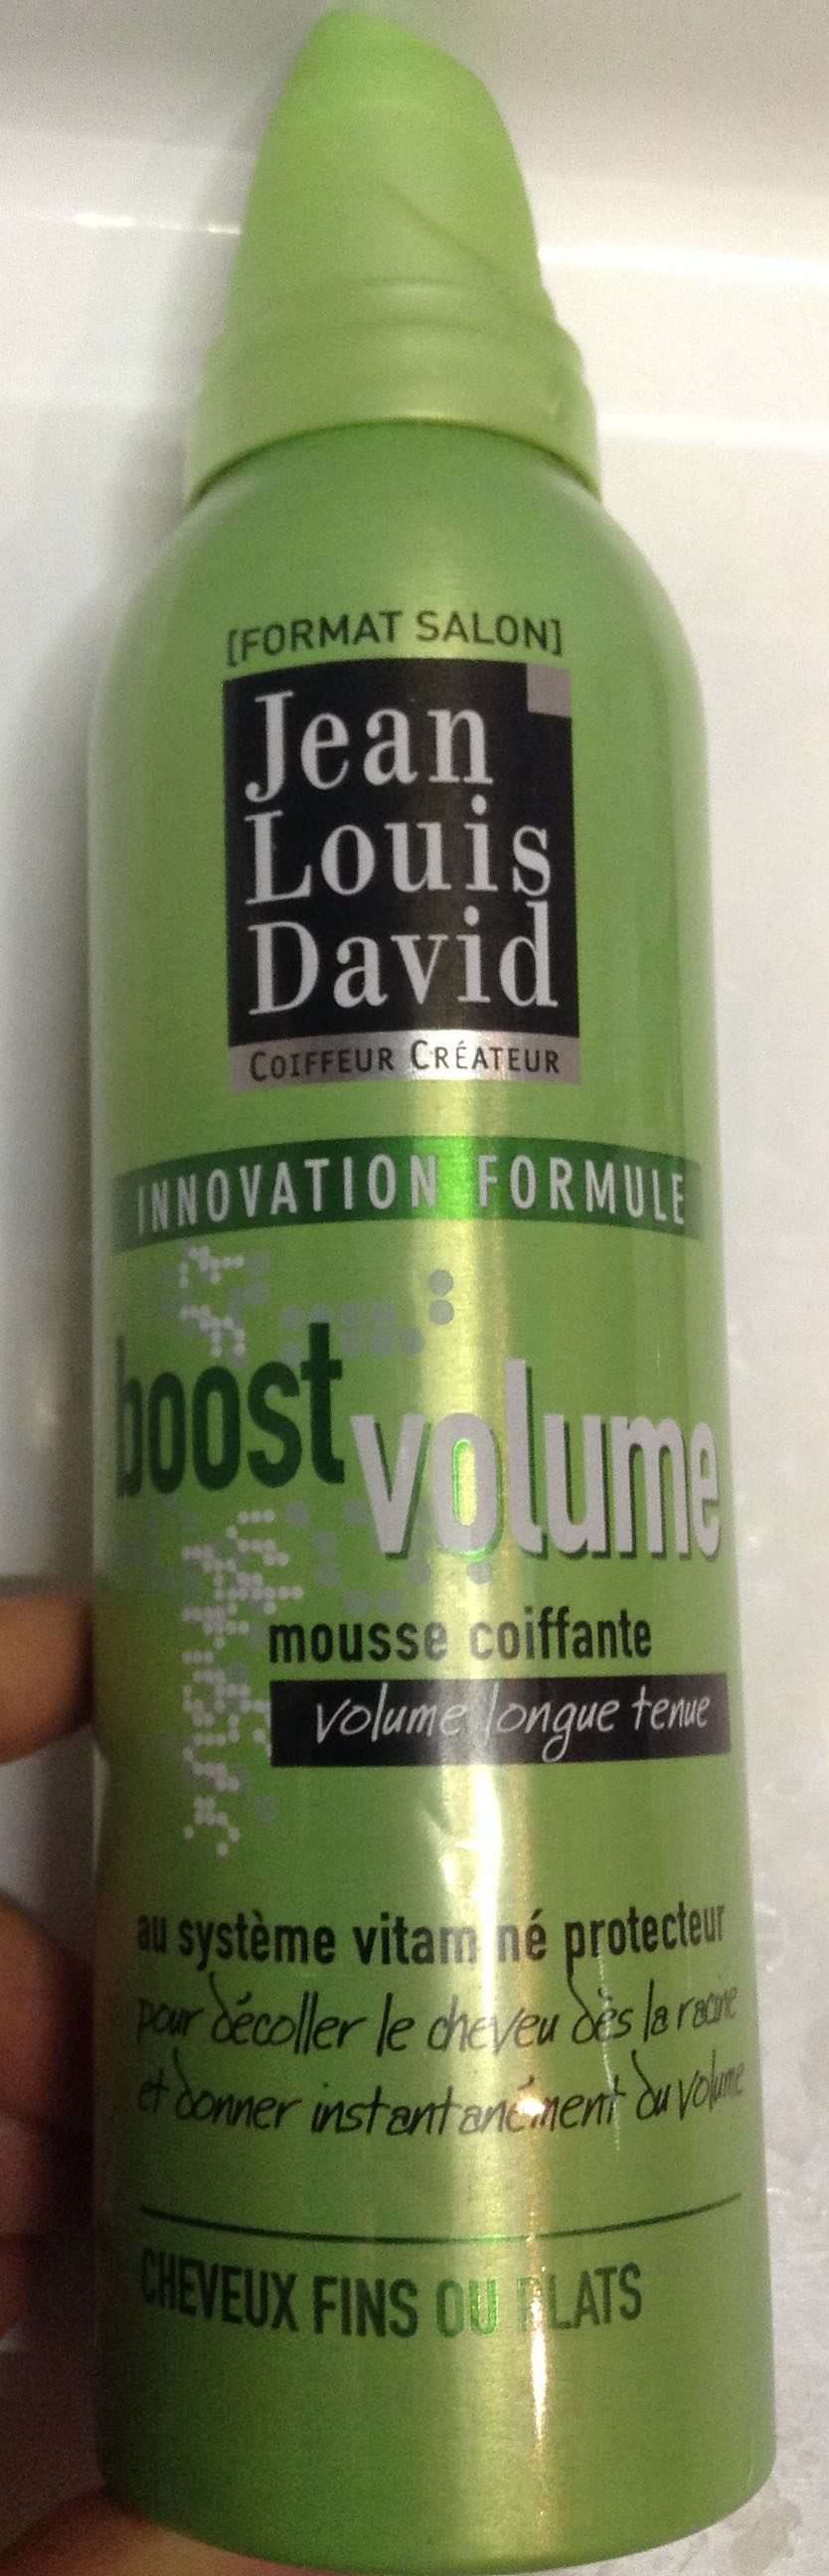 Boost volume mousse coiffante - Product - fr